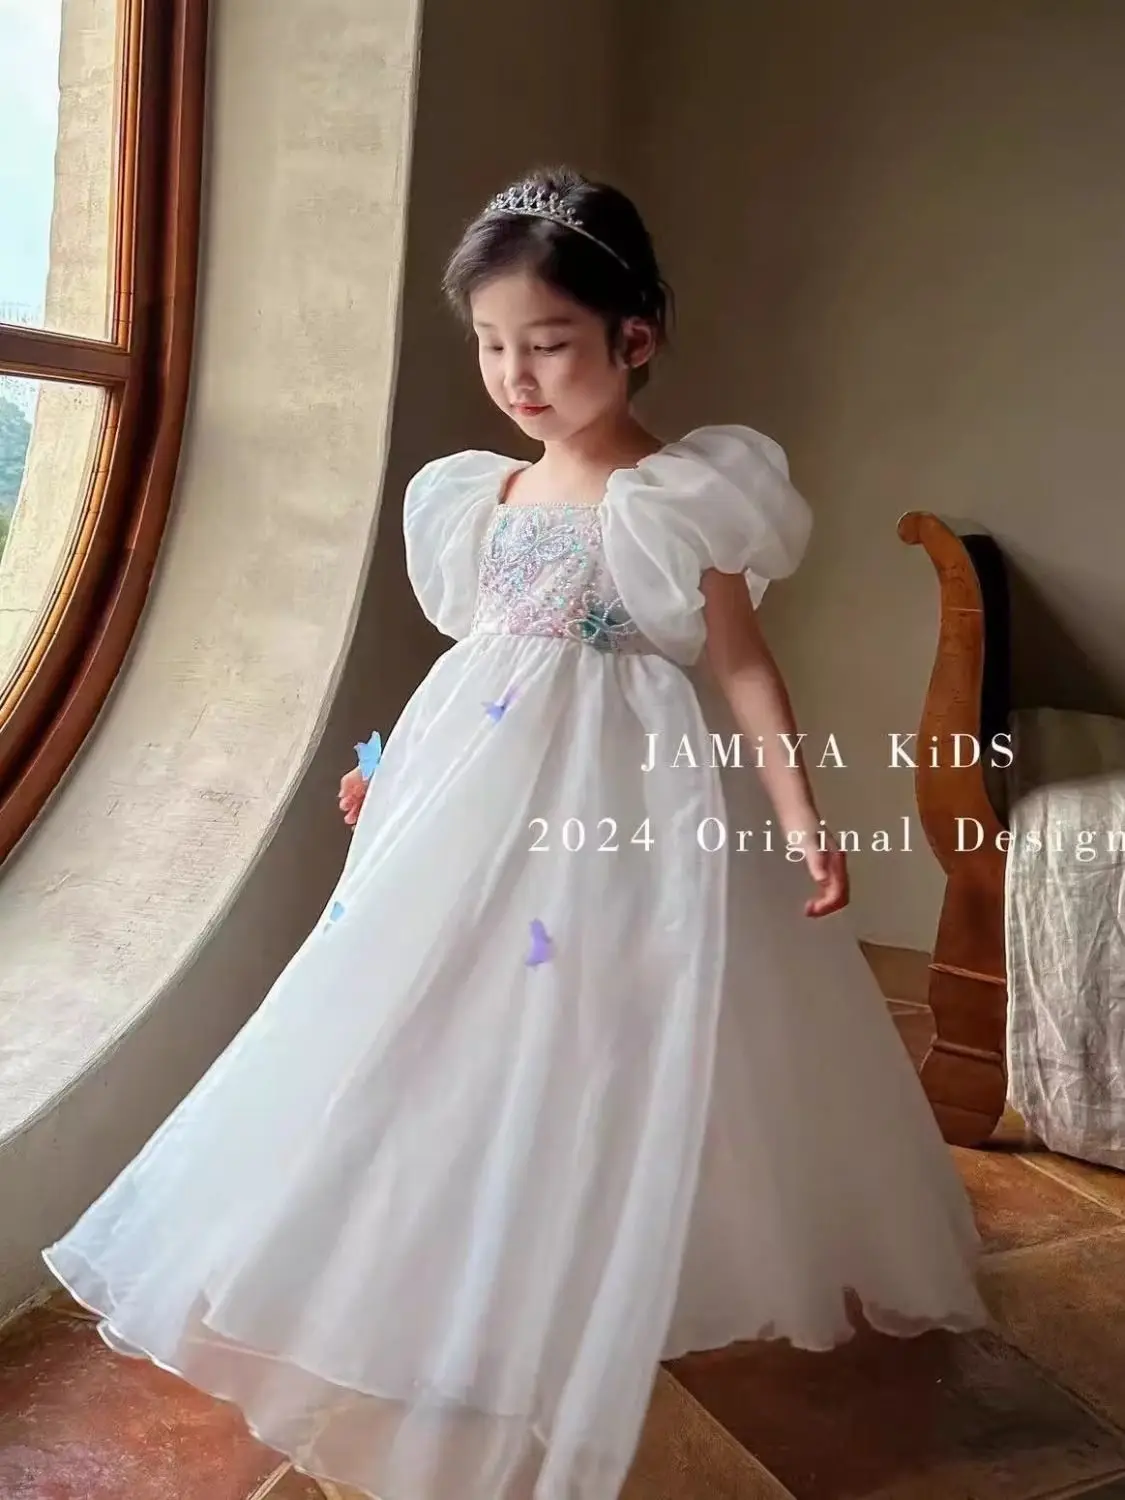 

Baby Girl Birthday Butterfly Dress Sequined Fluffy White Wedding Girls Dresses Weddings Kids Princess Ball Gown Long Skirts